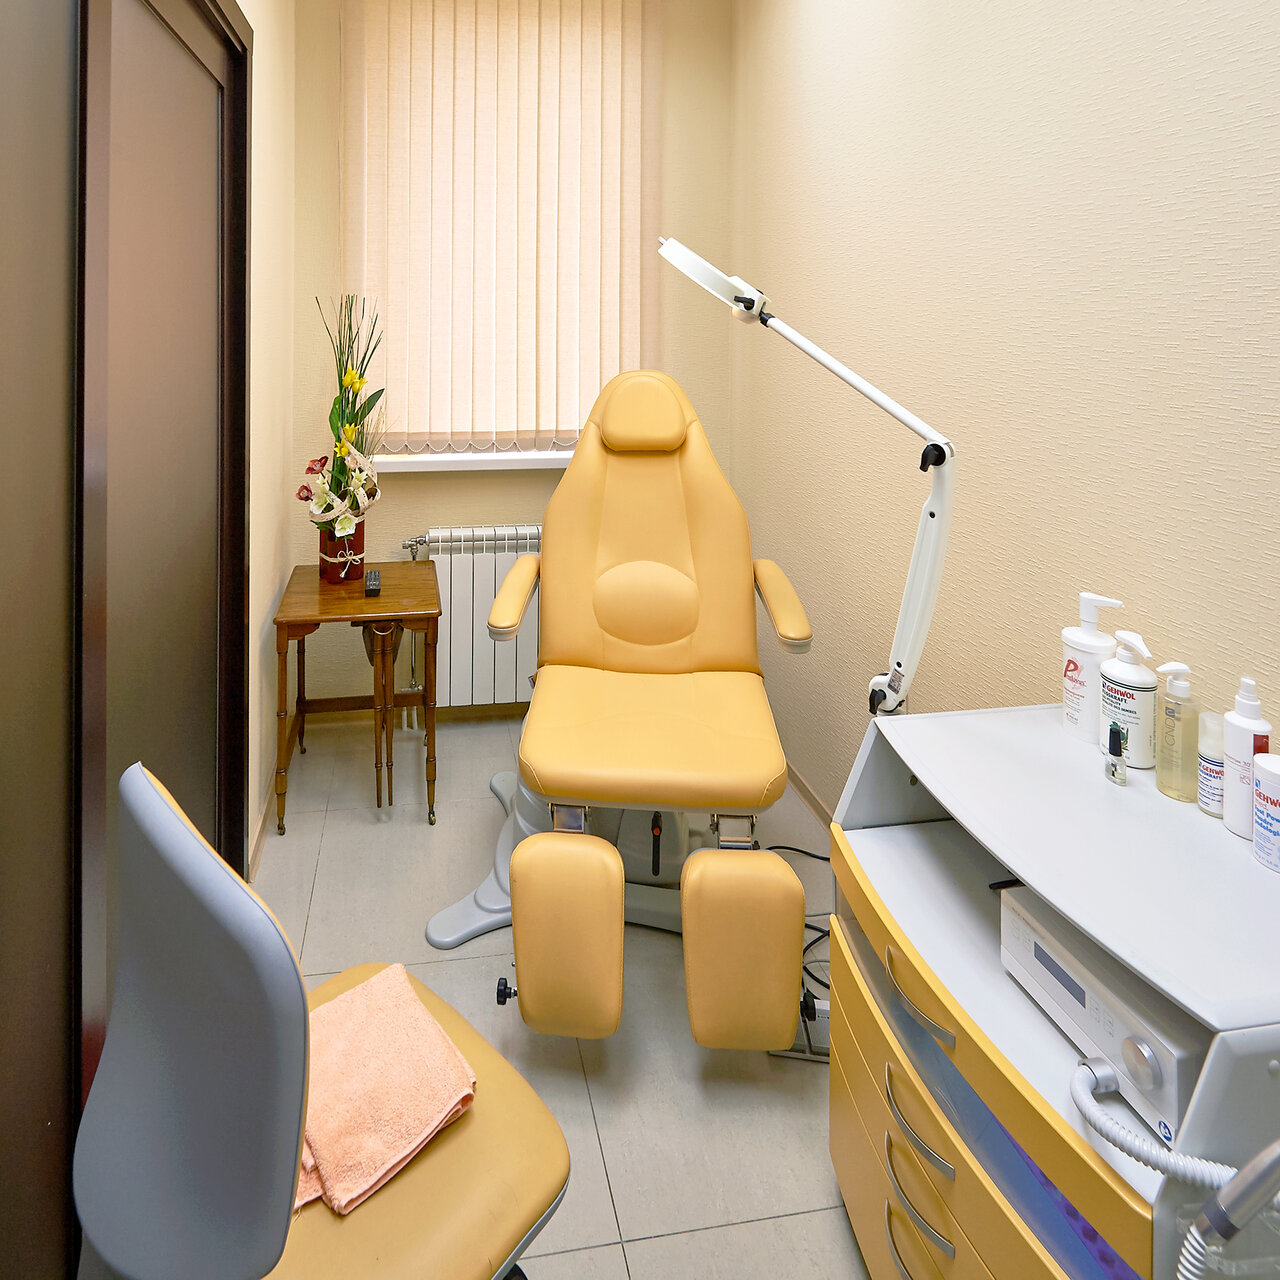 St-clinic - Найдите проверенную стоматологию Yull.ru